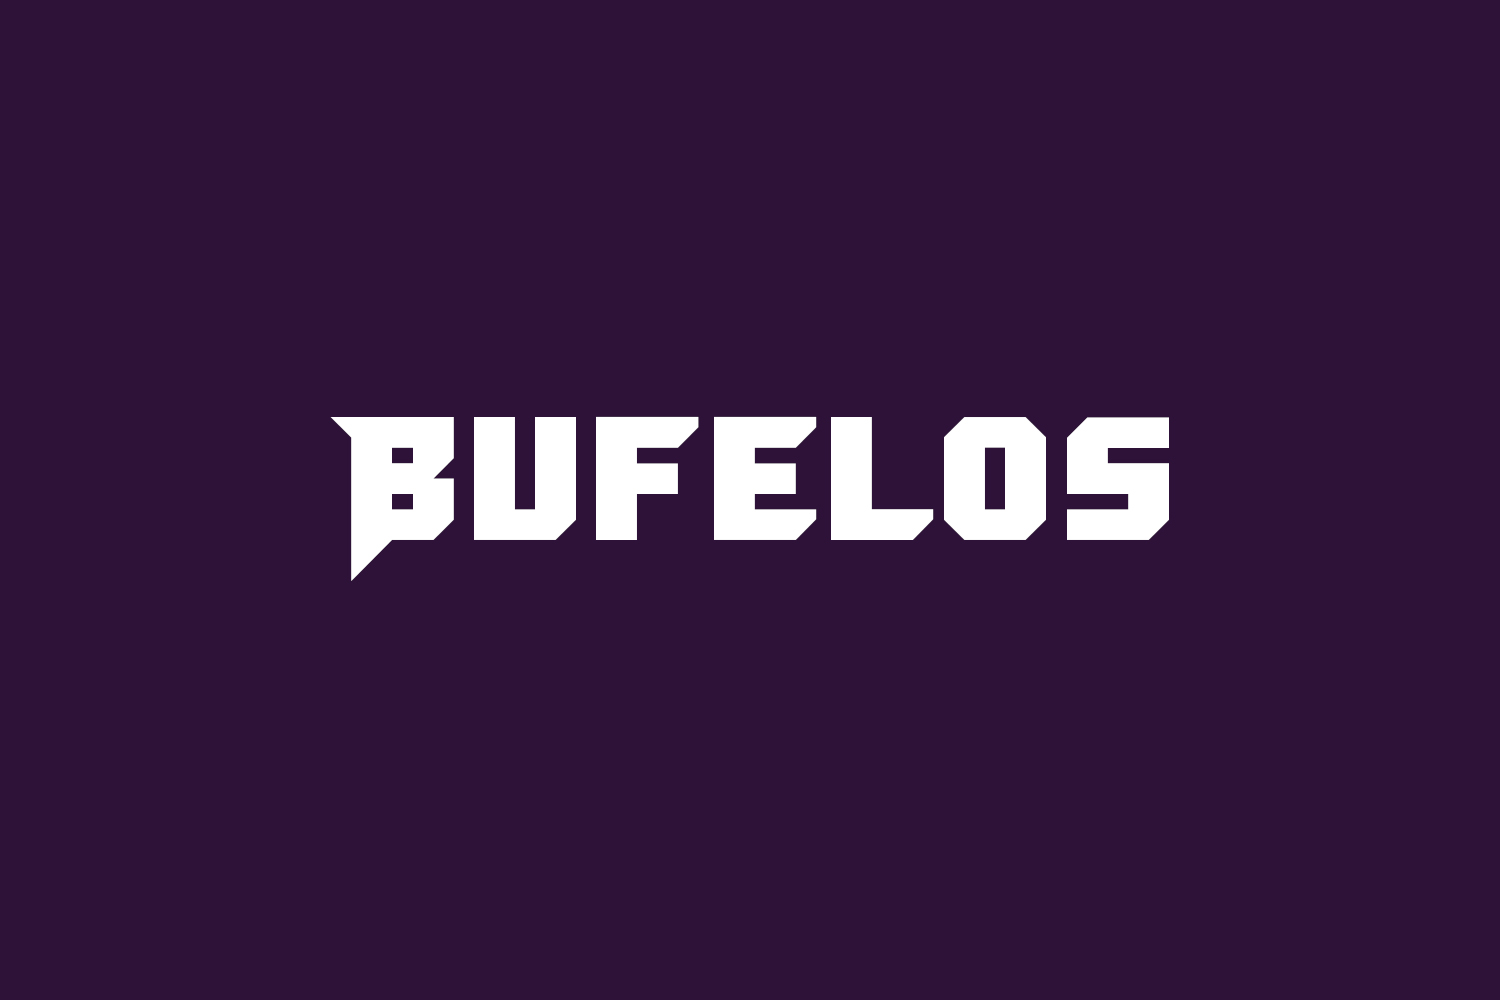 Bufelos Free Font